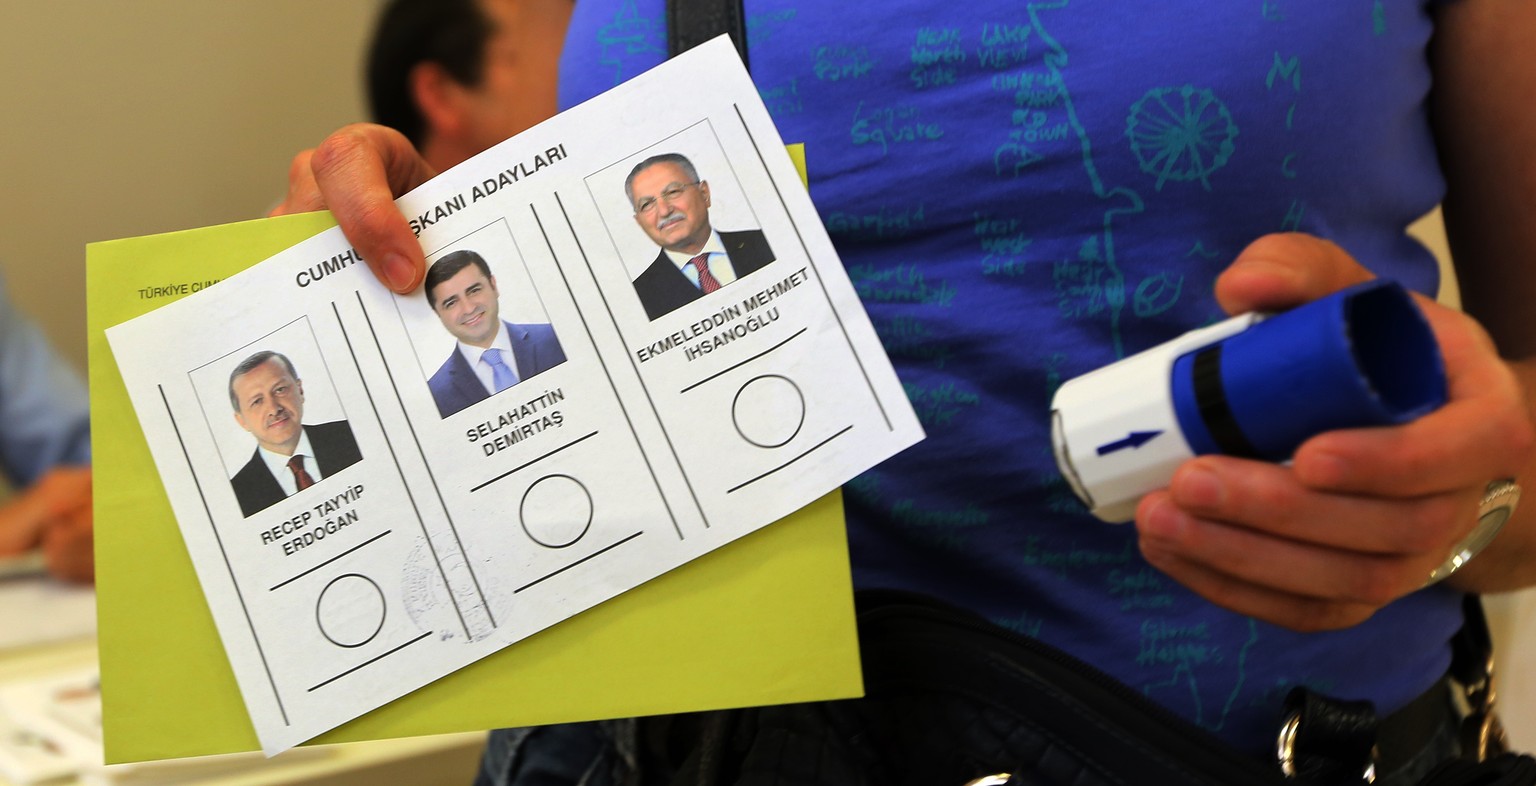 Wahlliste mit den Kandidaten Recep Tayyip Erdogan, Selahattin Demirtas and Ekmeleddin Mehmet Ihsanoglu (v.l.n.r)